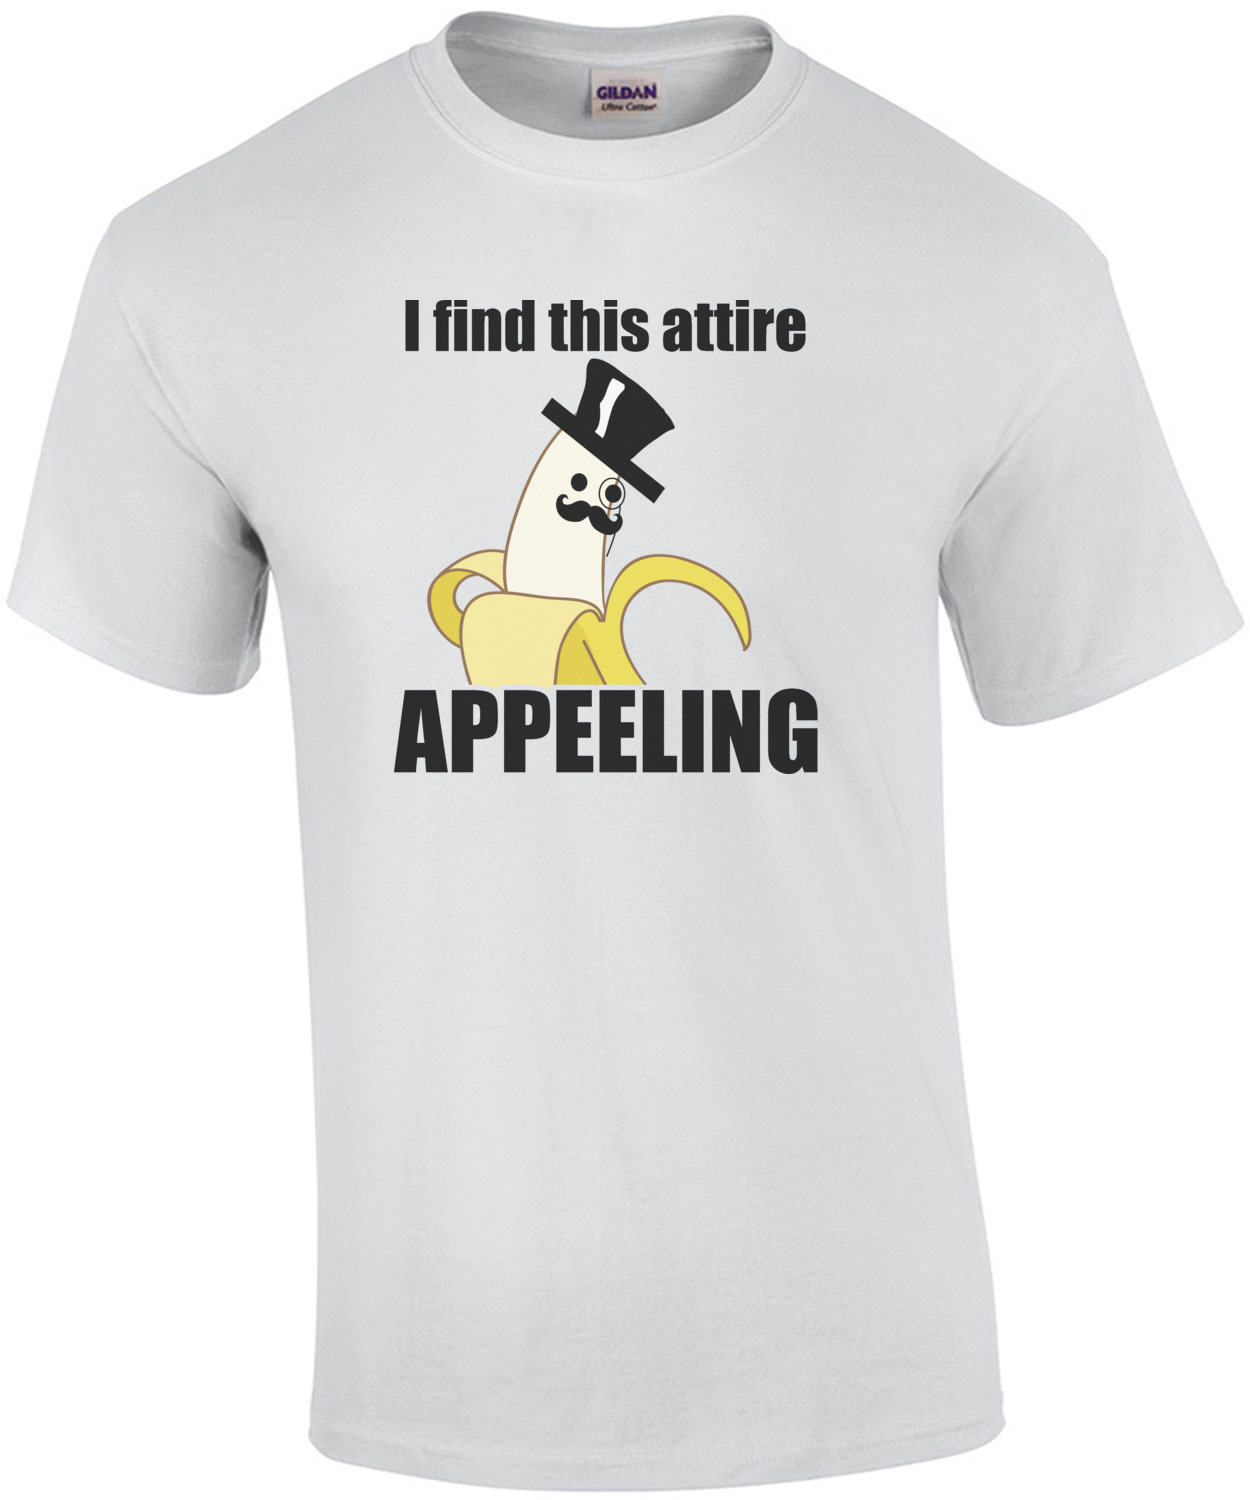 I find this attire appeeling - Pun T-Shirt